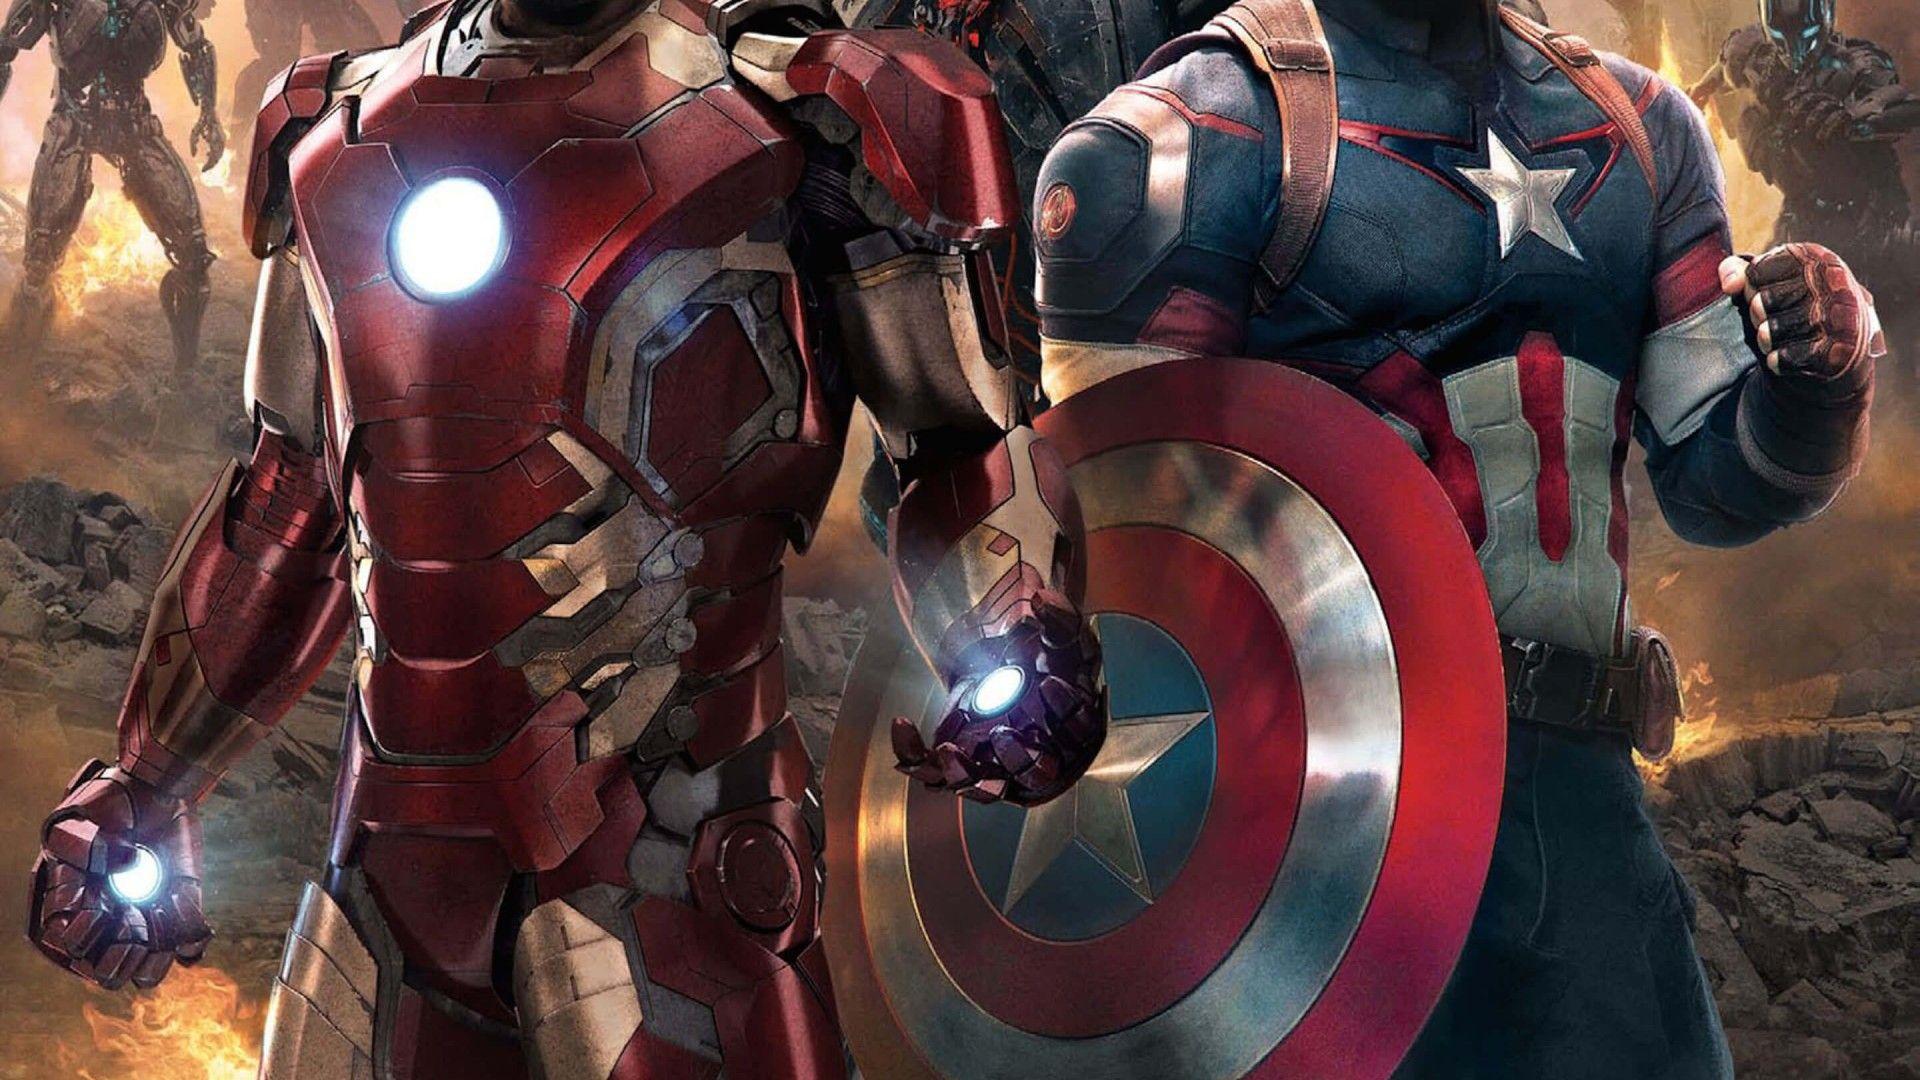 Captain America Vs Iron Man Wallpapers - Top Free Captain America Vs